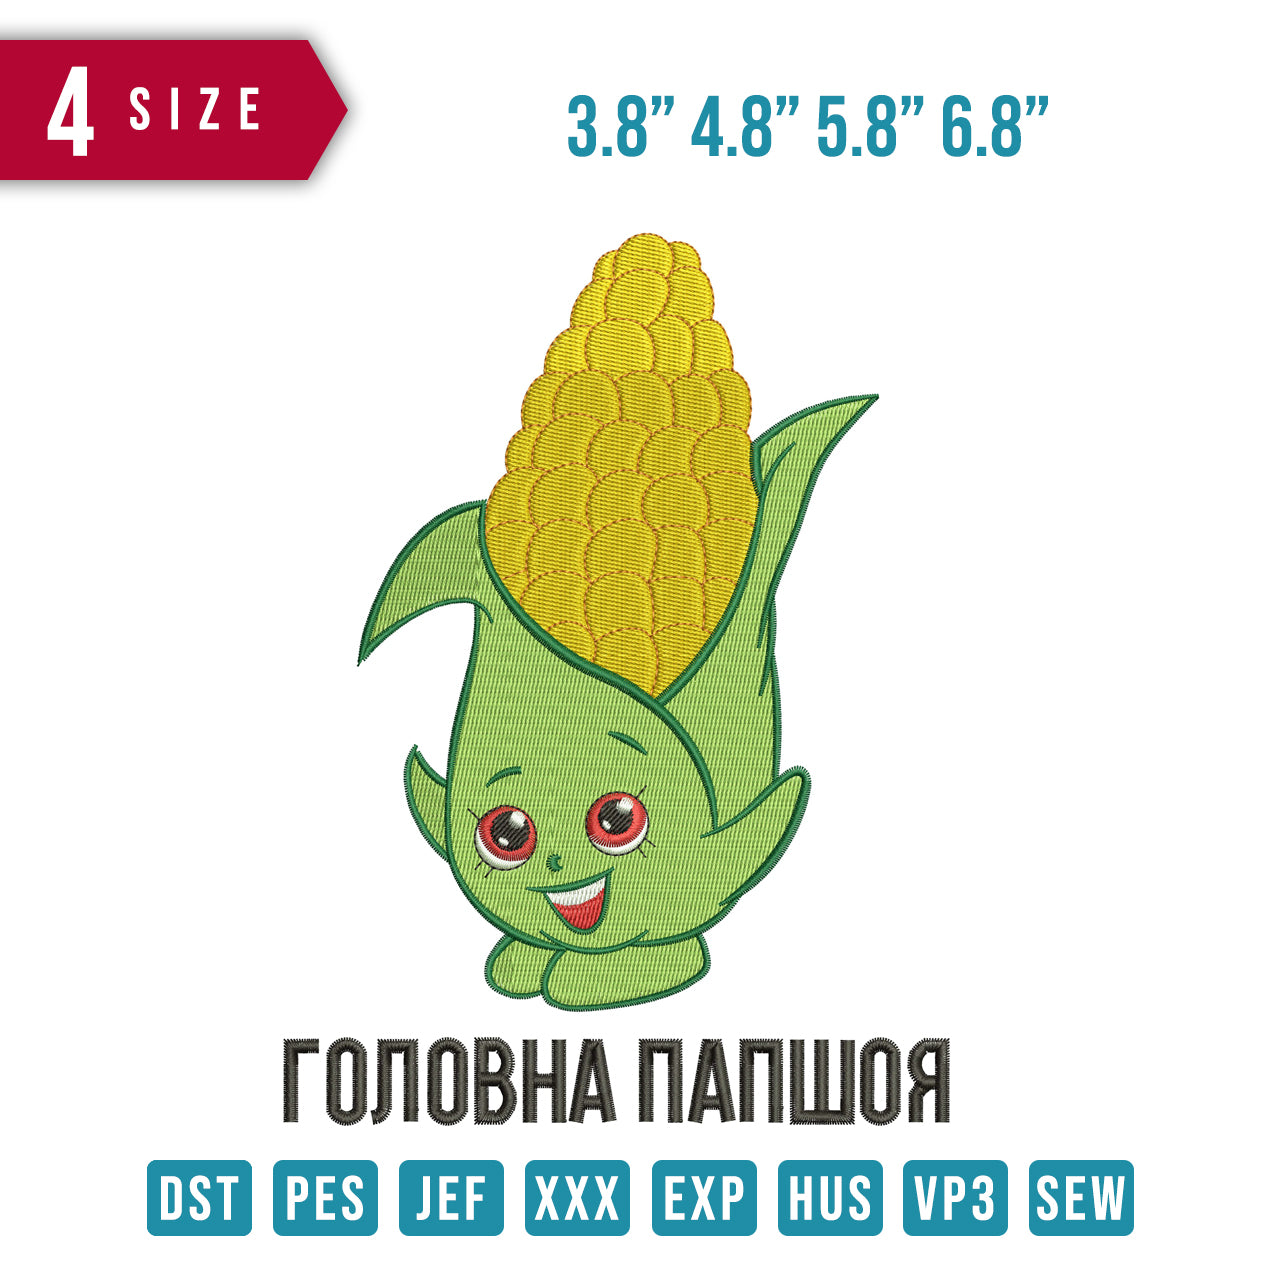 Corn Ronobha